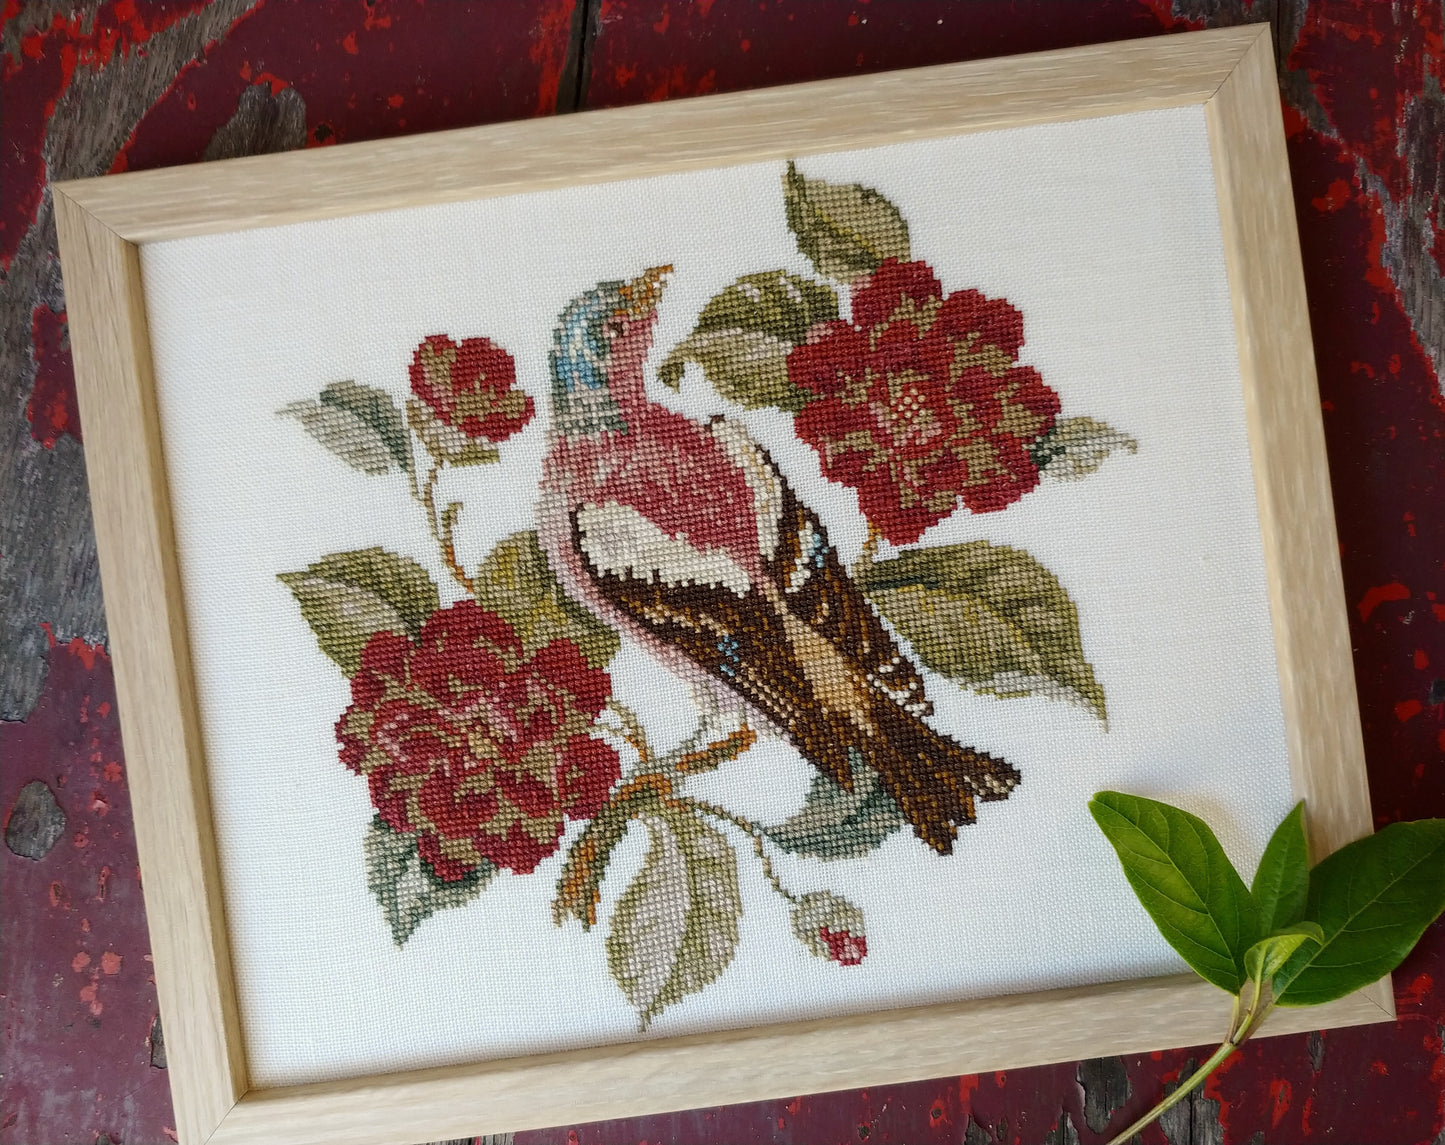 Among the Roses - Cross-stitch pattern by Mojo Stitches